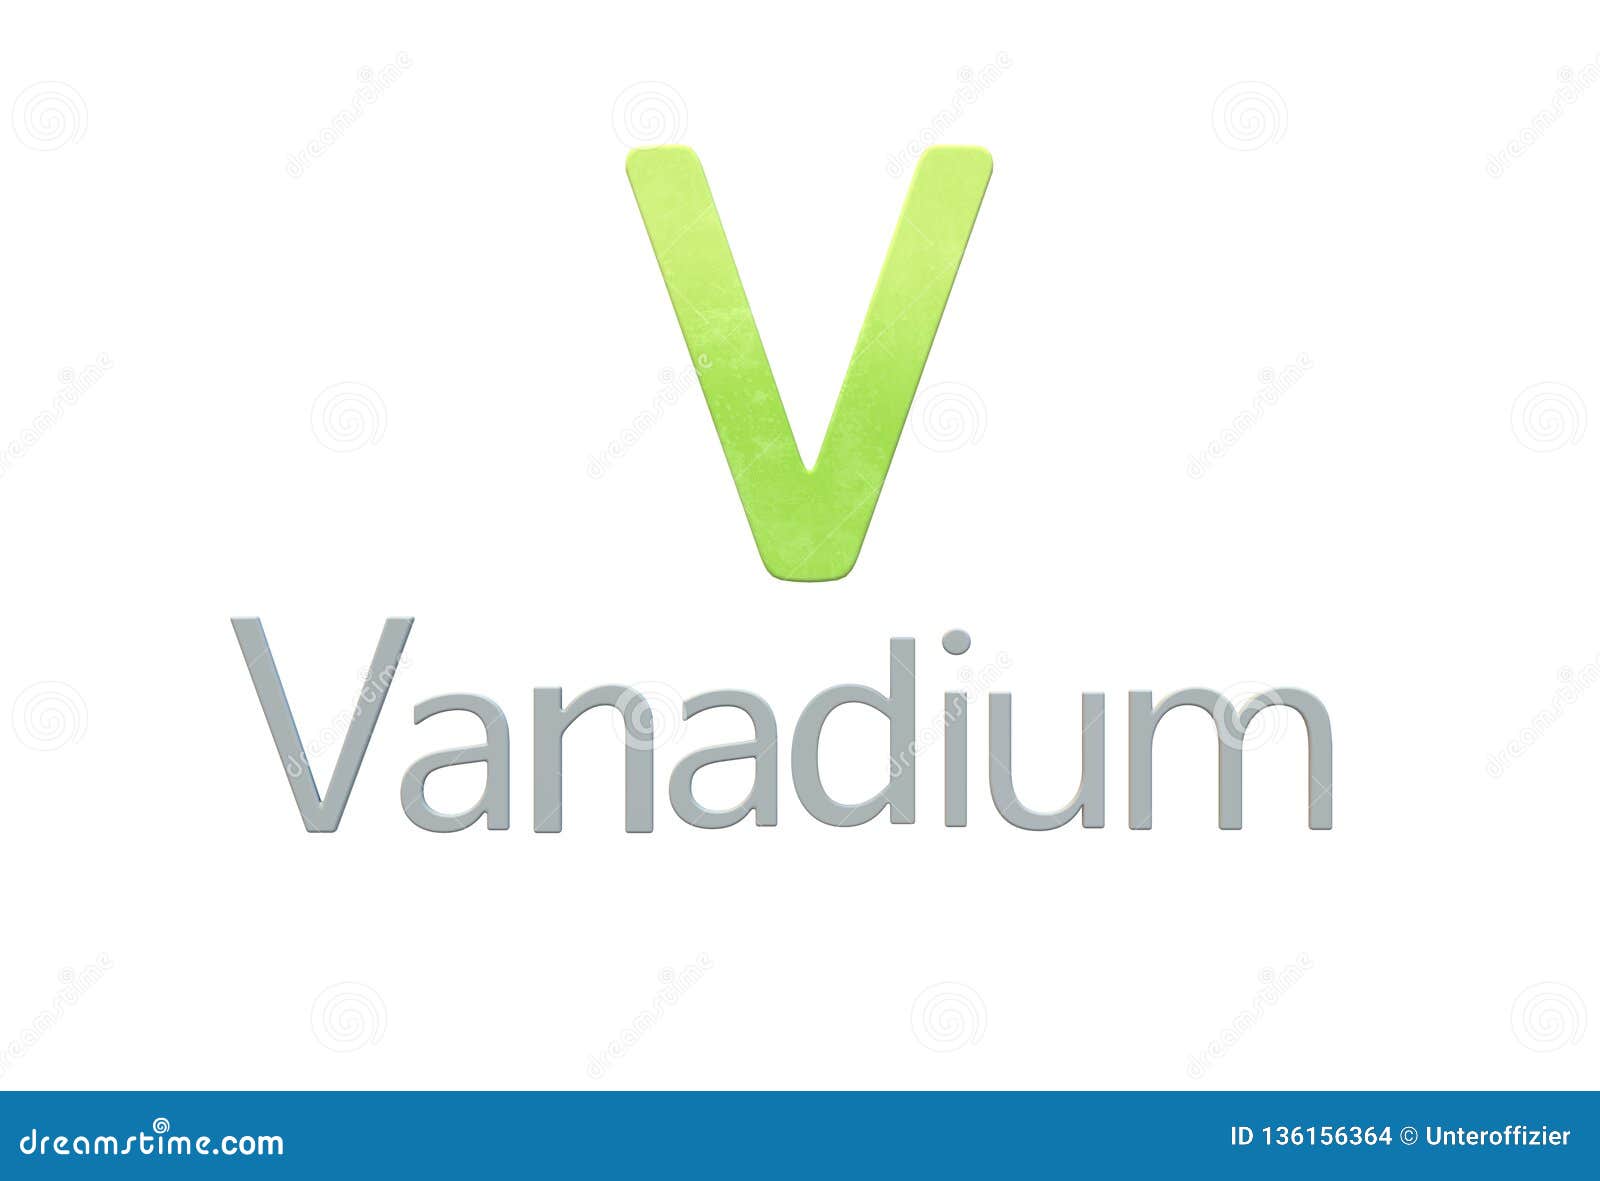 vanadium chemical  as in the periodic table